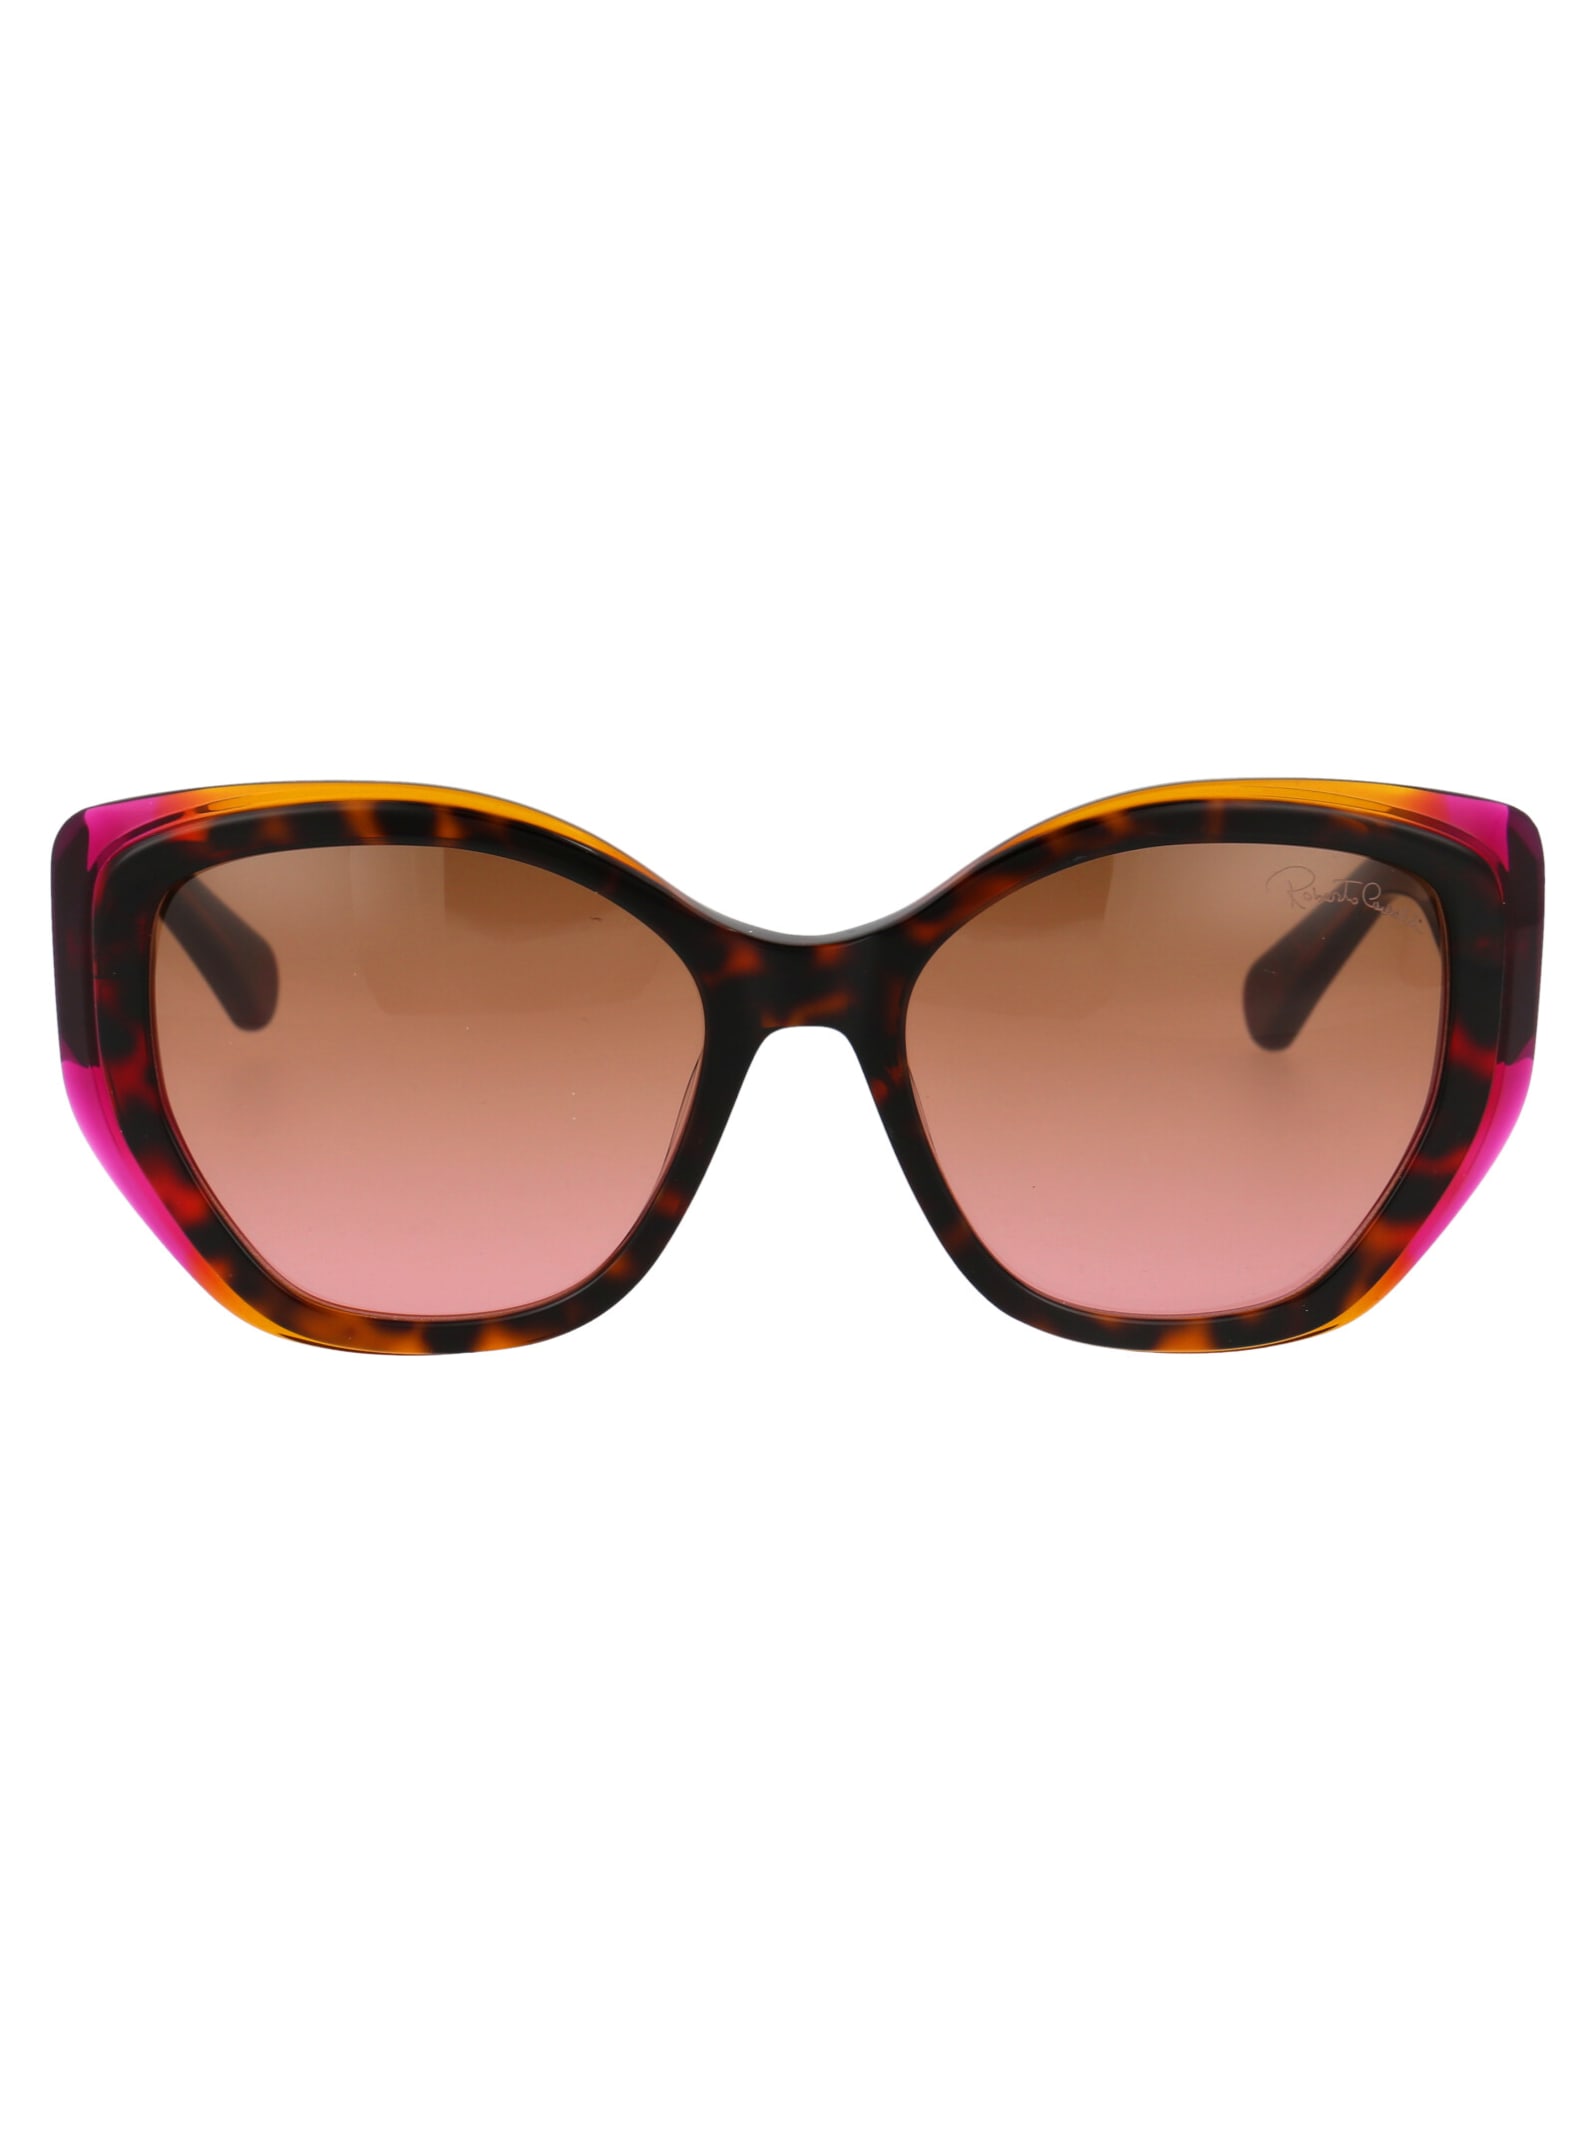 Roberto Cavalli Rc1146 Sunglasses